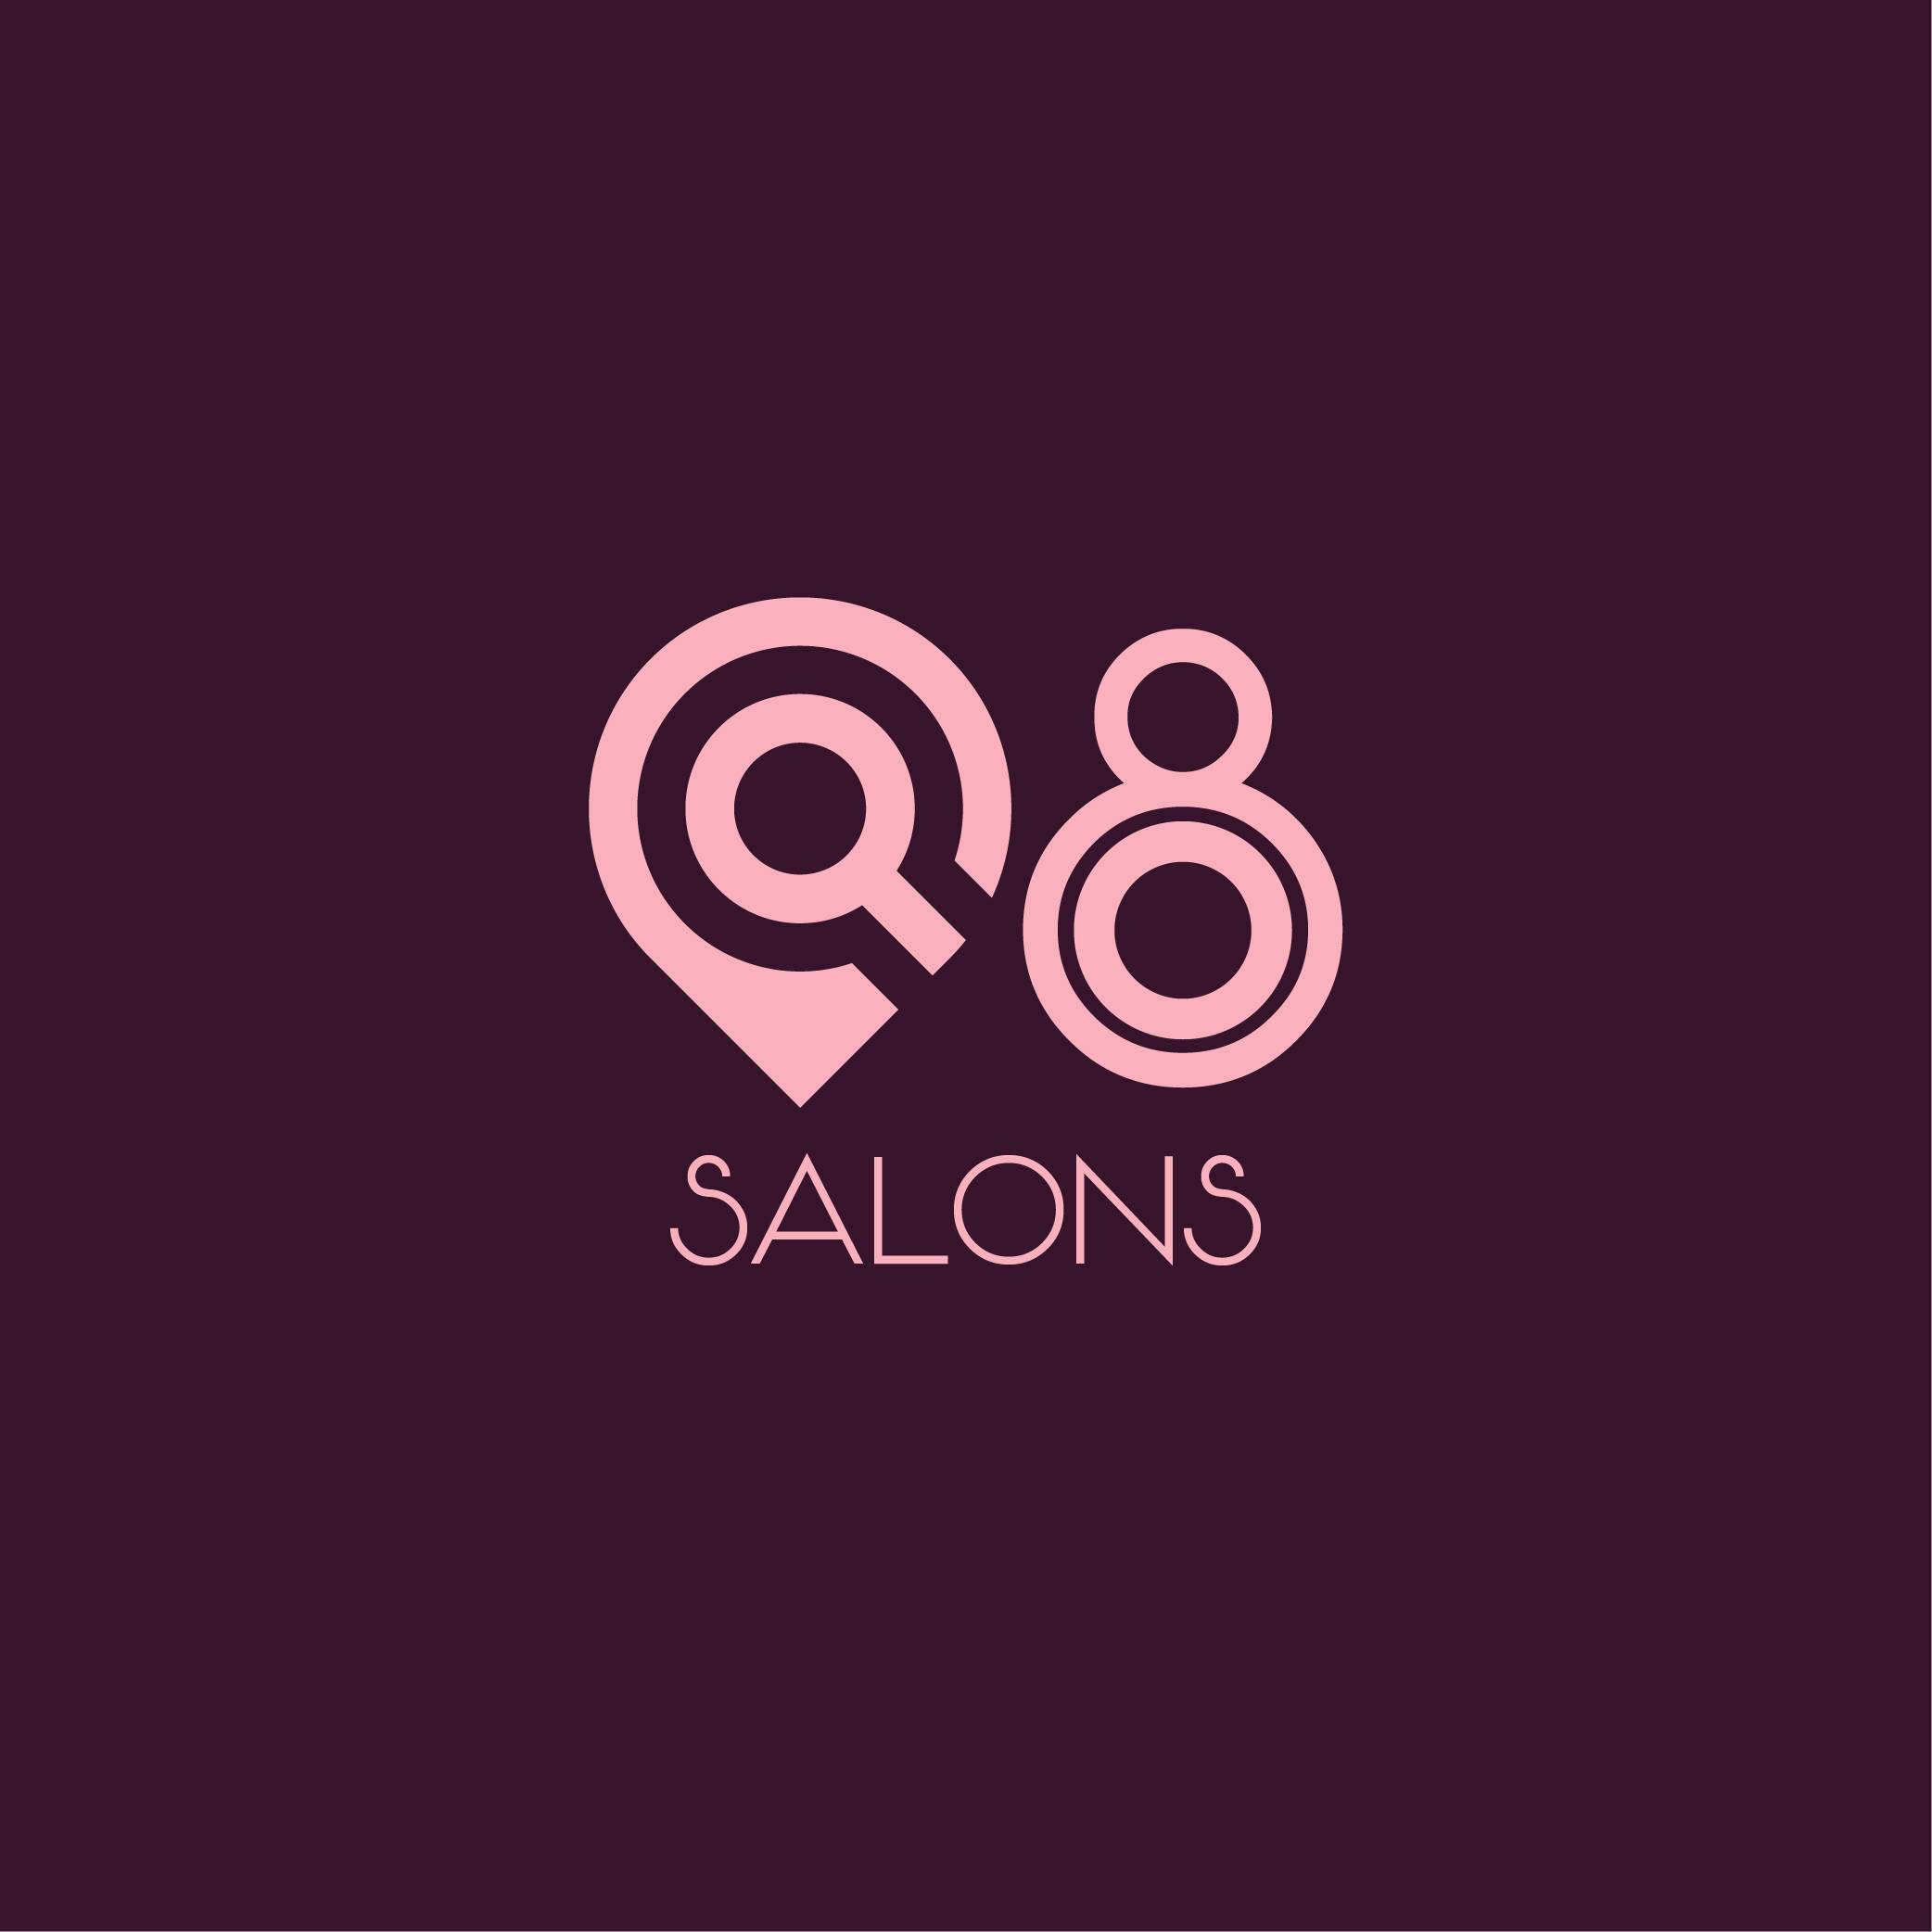 Q8 Salon